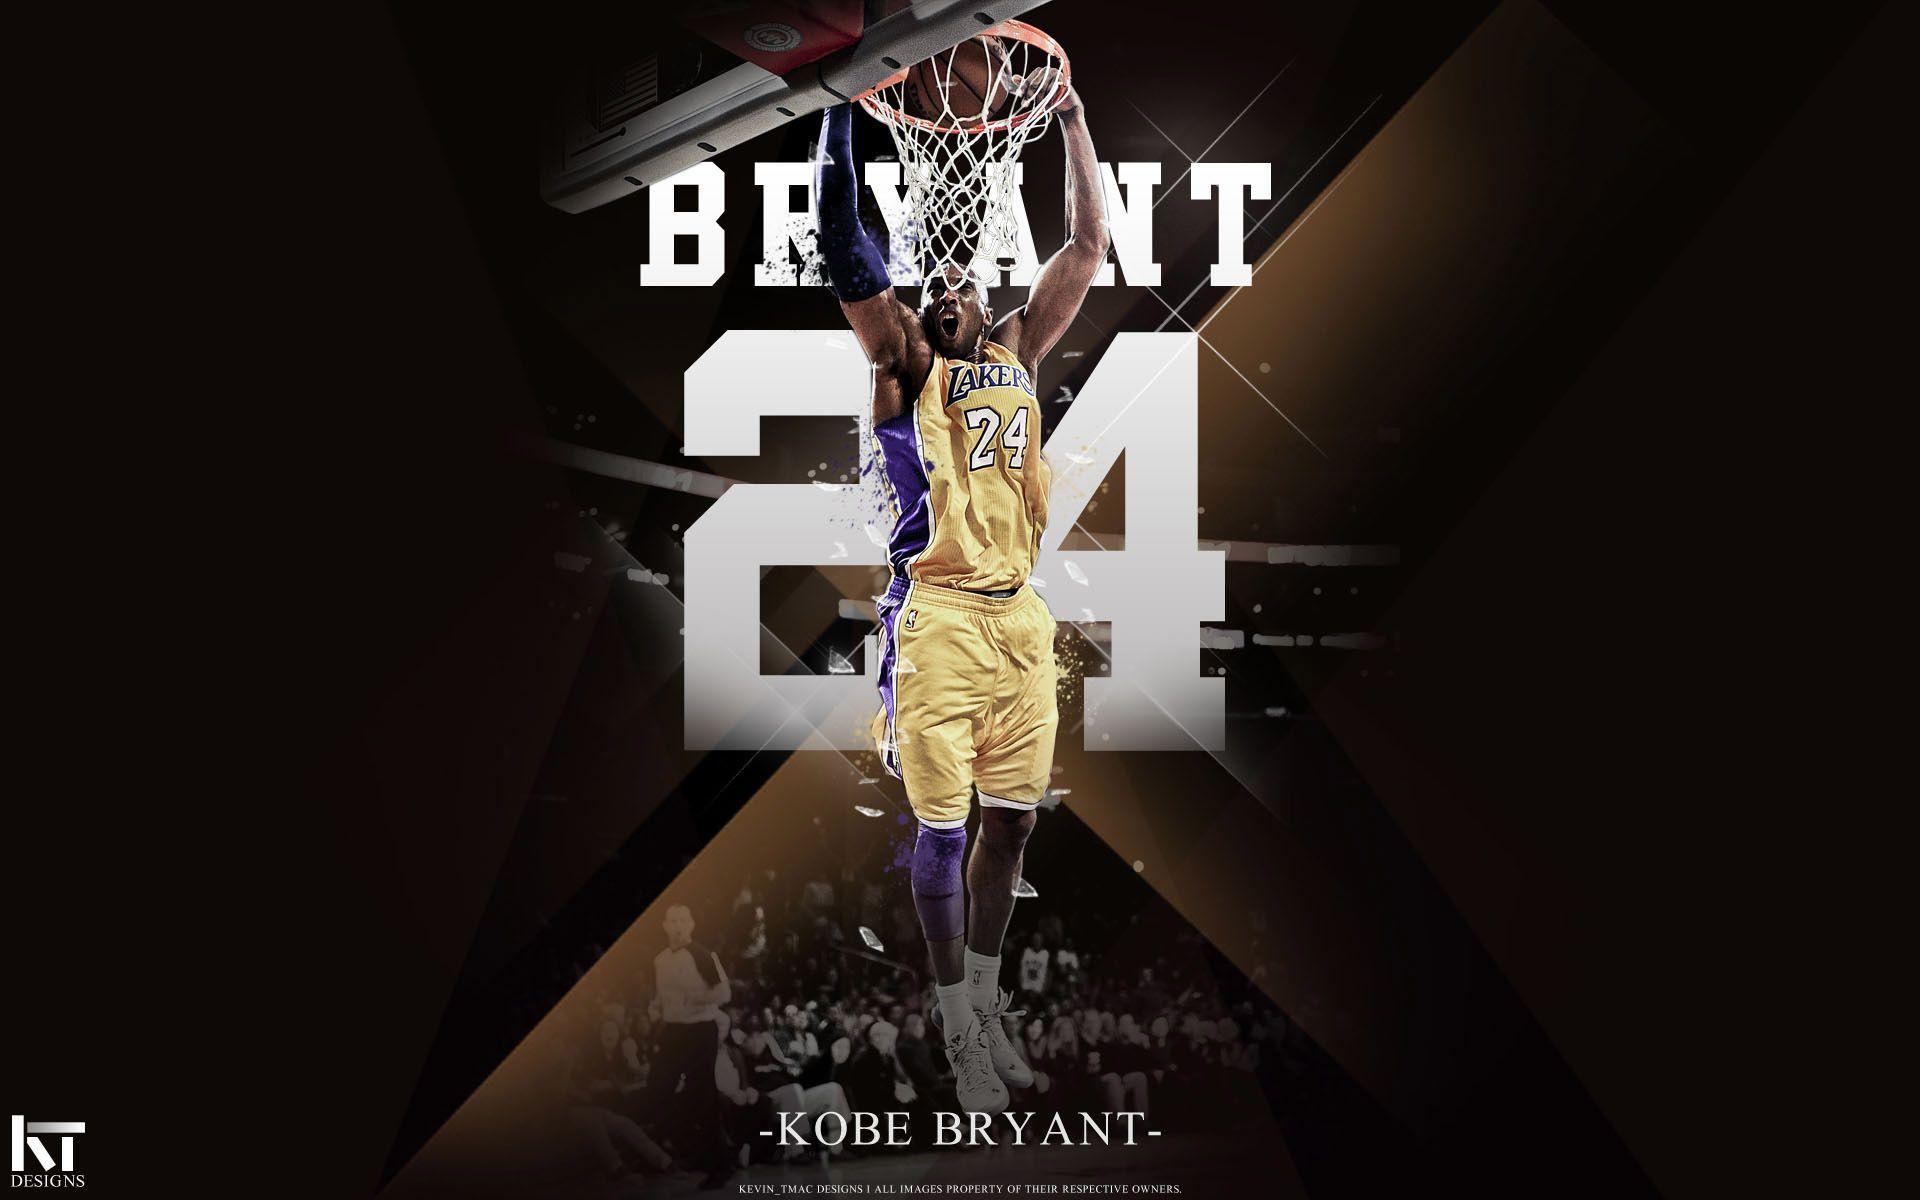 Kobe Bryant Wallpaper HD. Wallpaper, Background, Image, Art